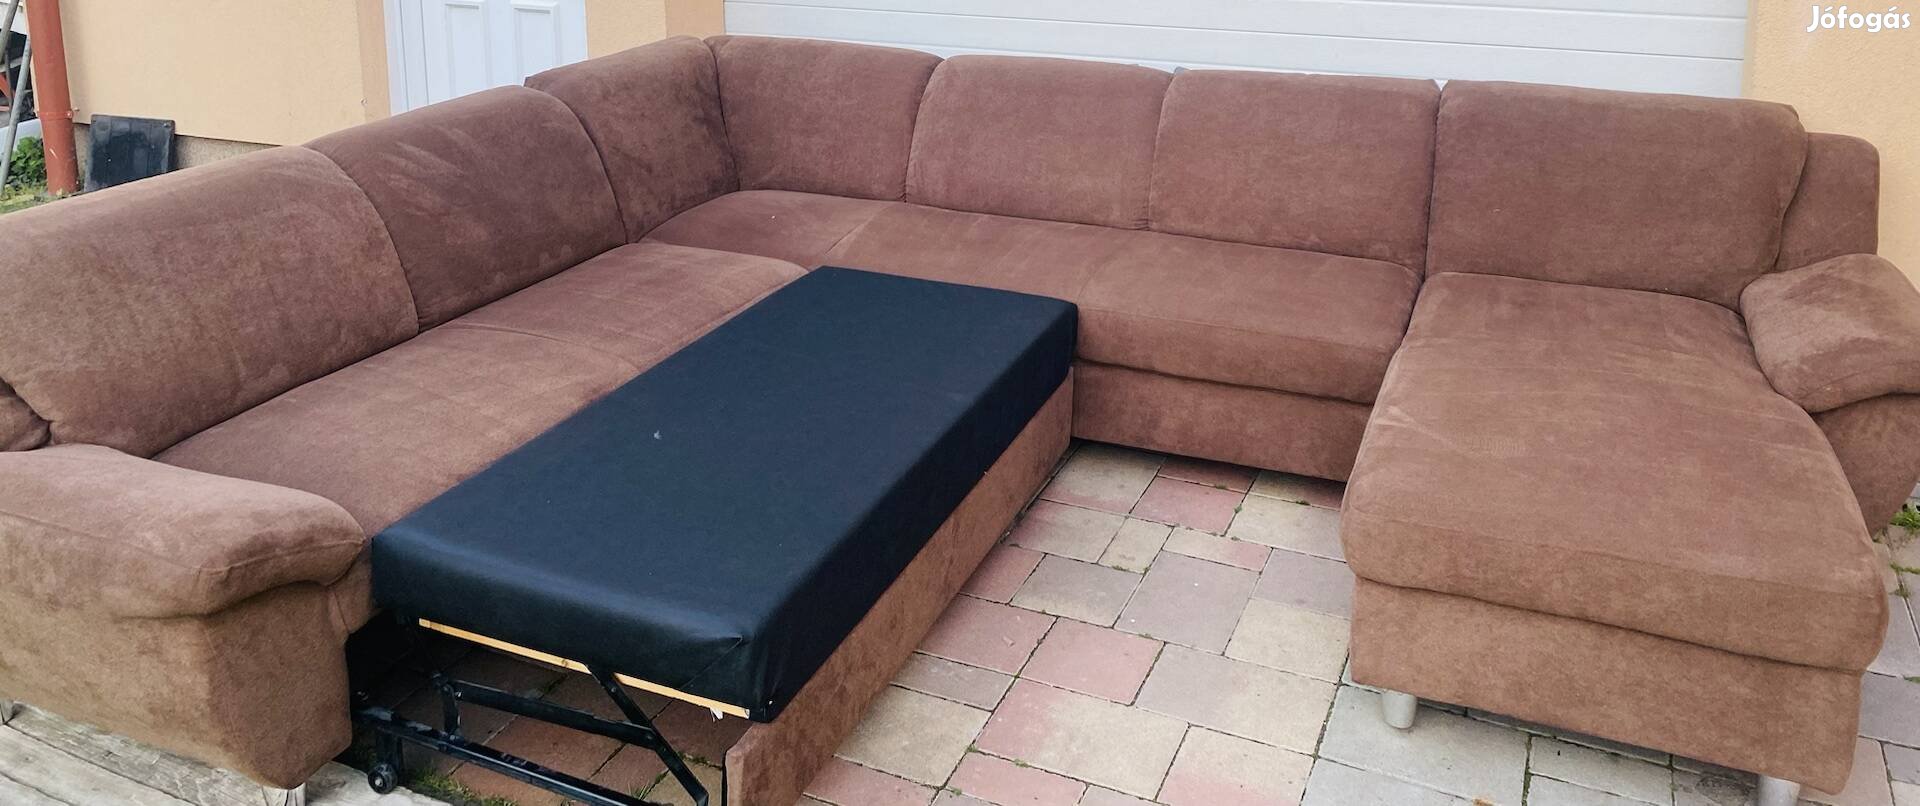 U alakú ágyazható kanapé